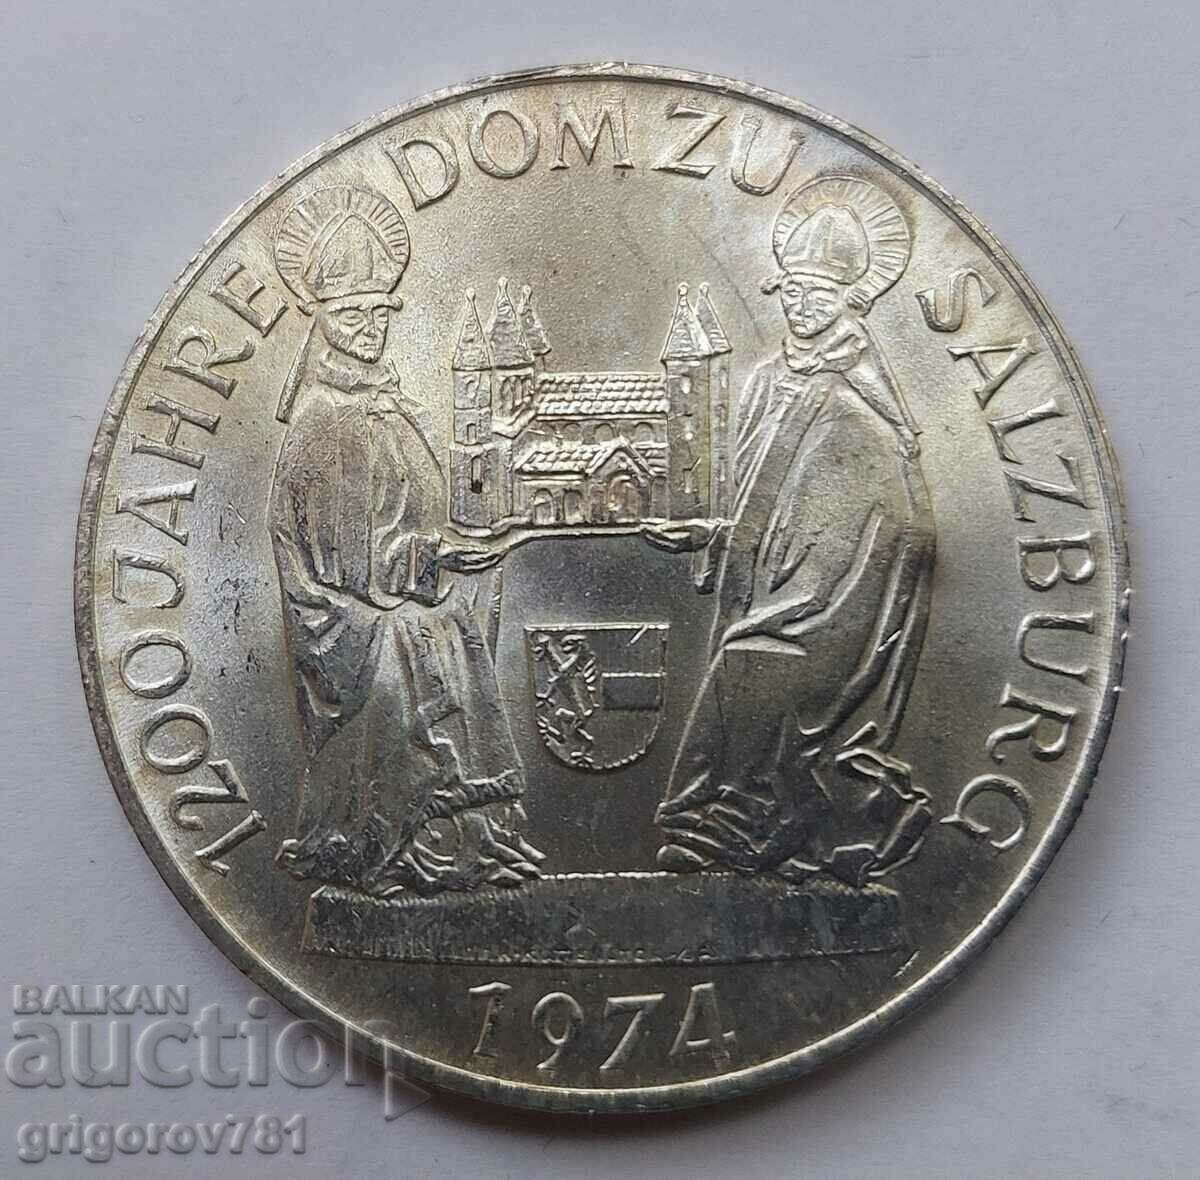 50 șilingi argint Austria 1974 - Moneda de argint #17